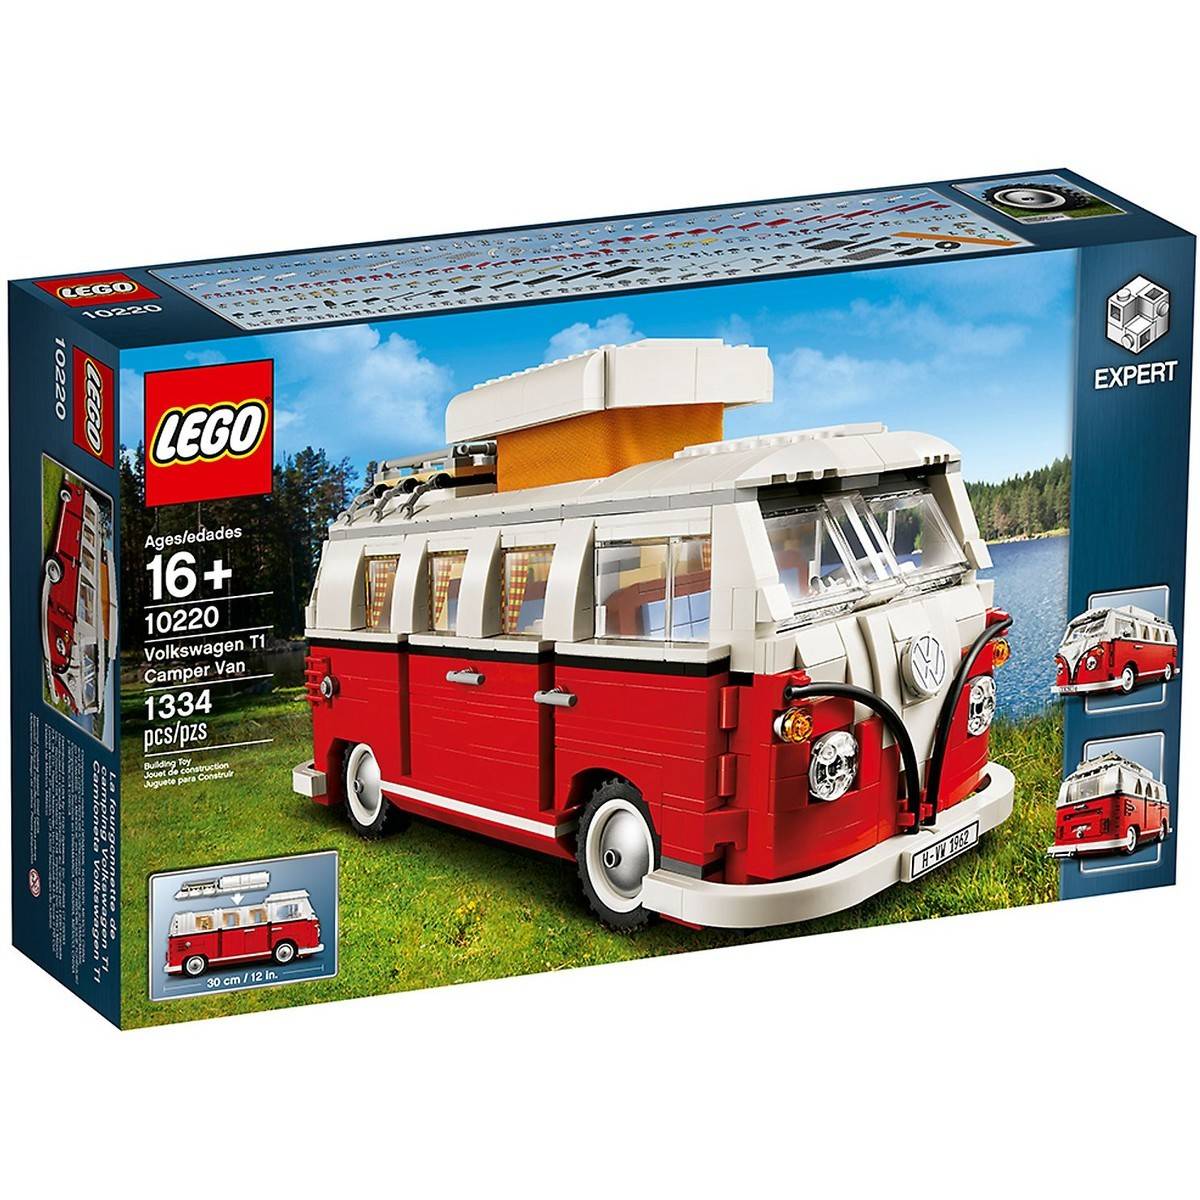 SG Brickswell LEGO Creator 10220 